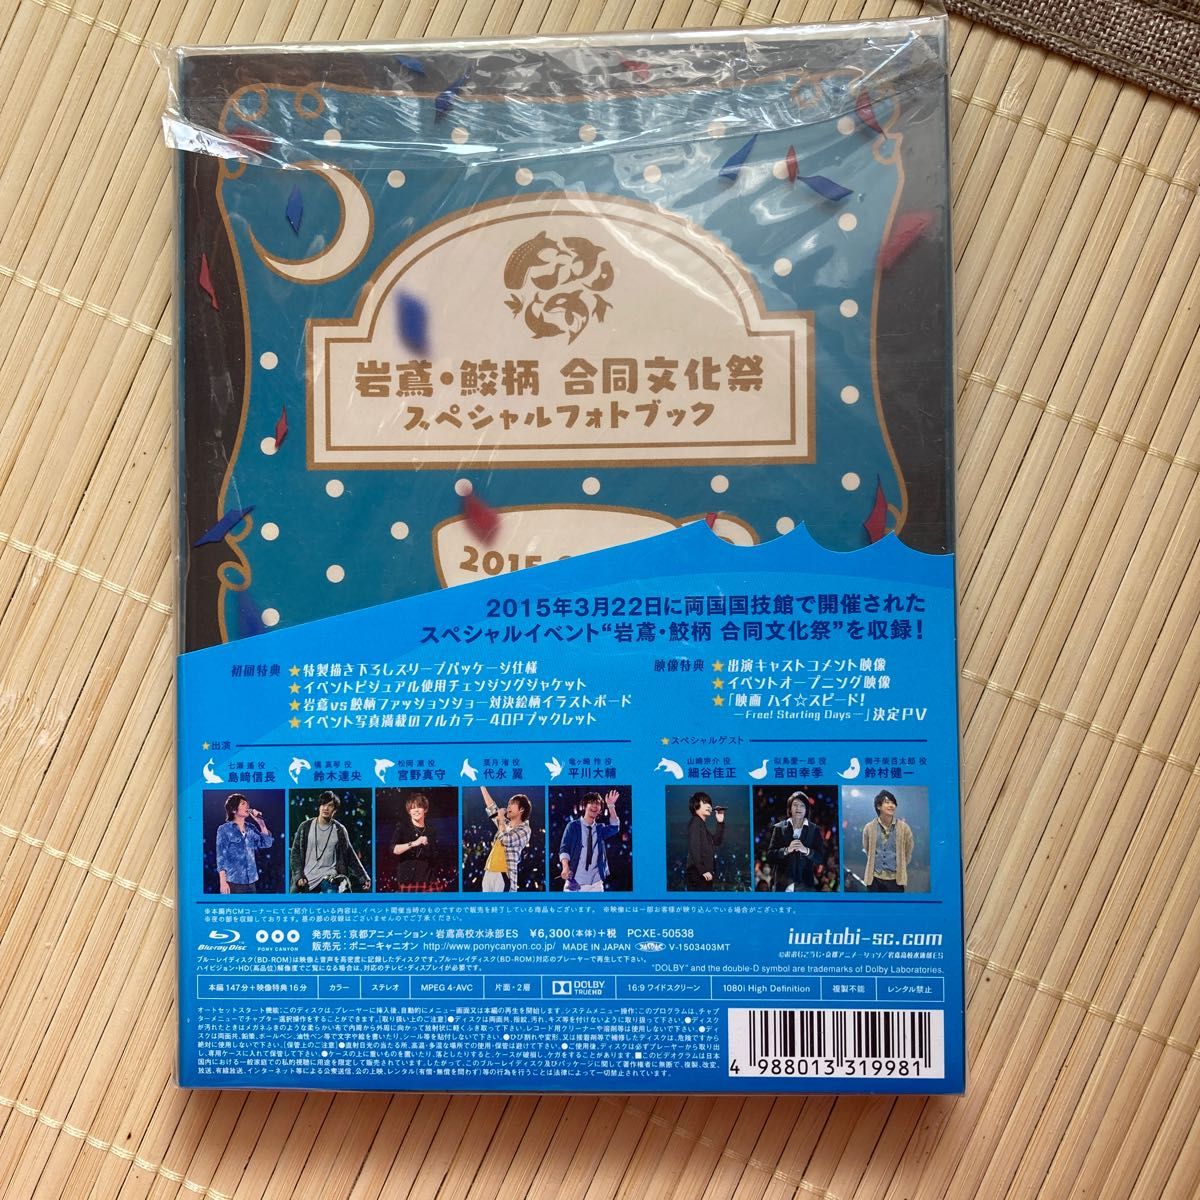 Free! Eternal Summer スペシャルイベント DVD